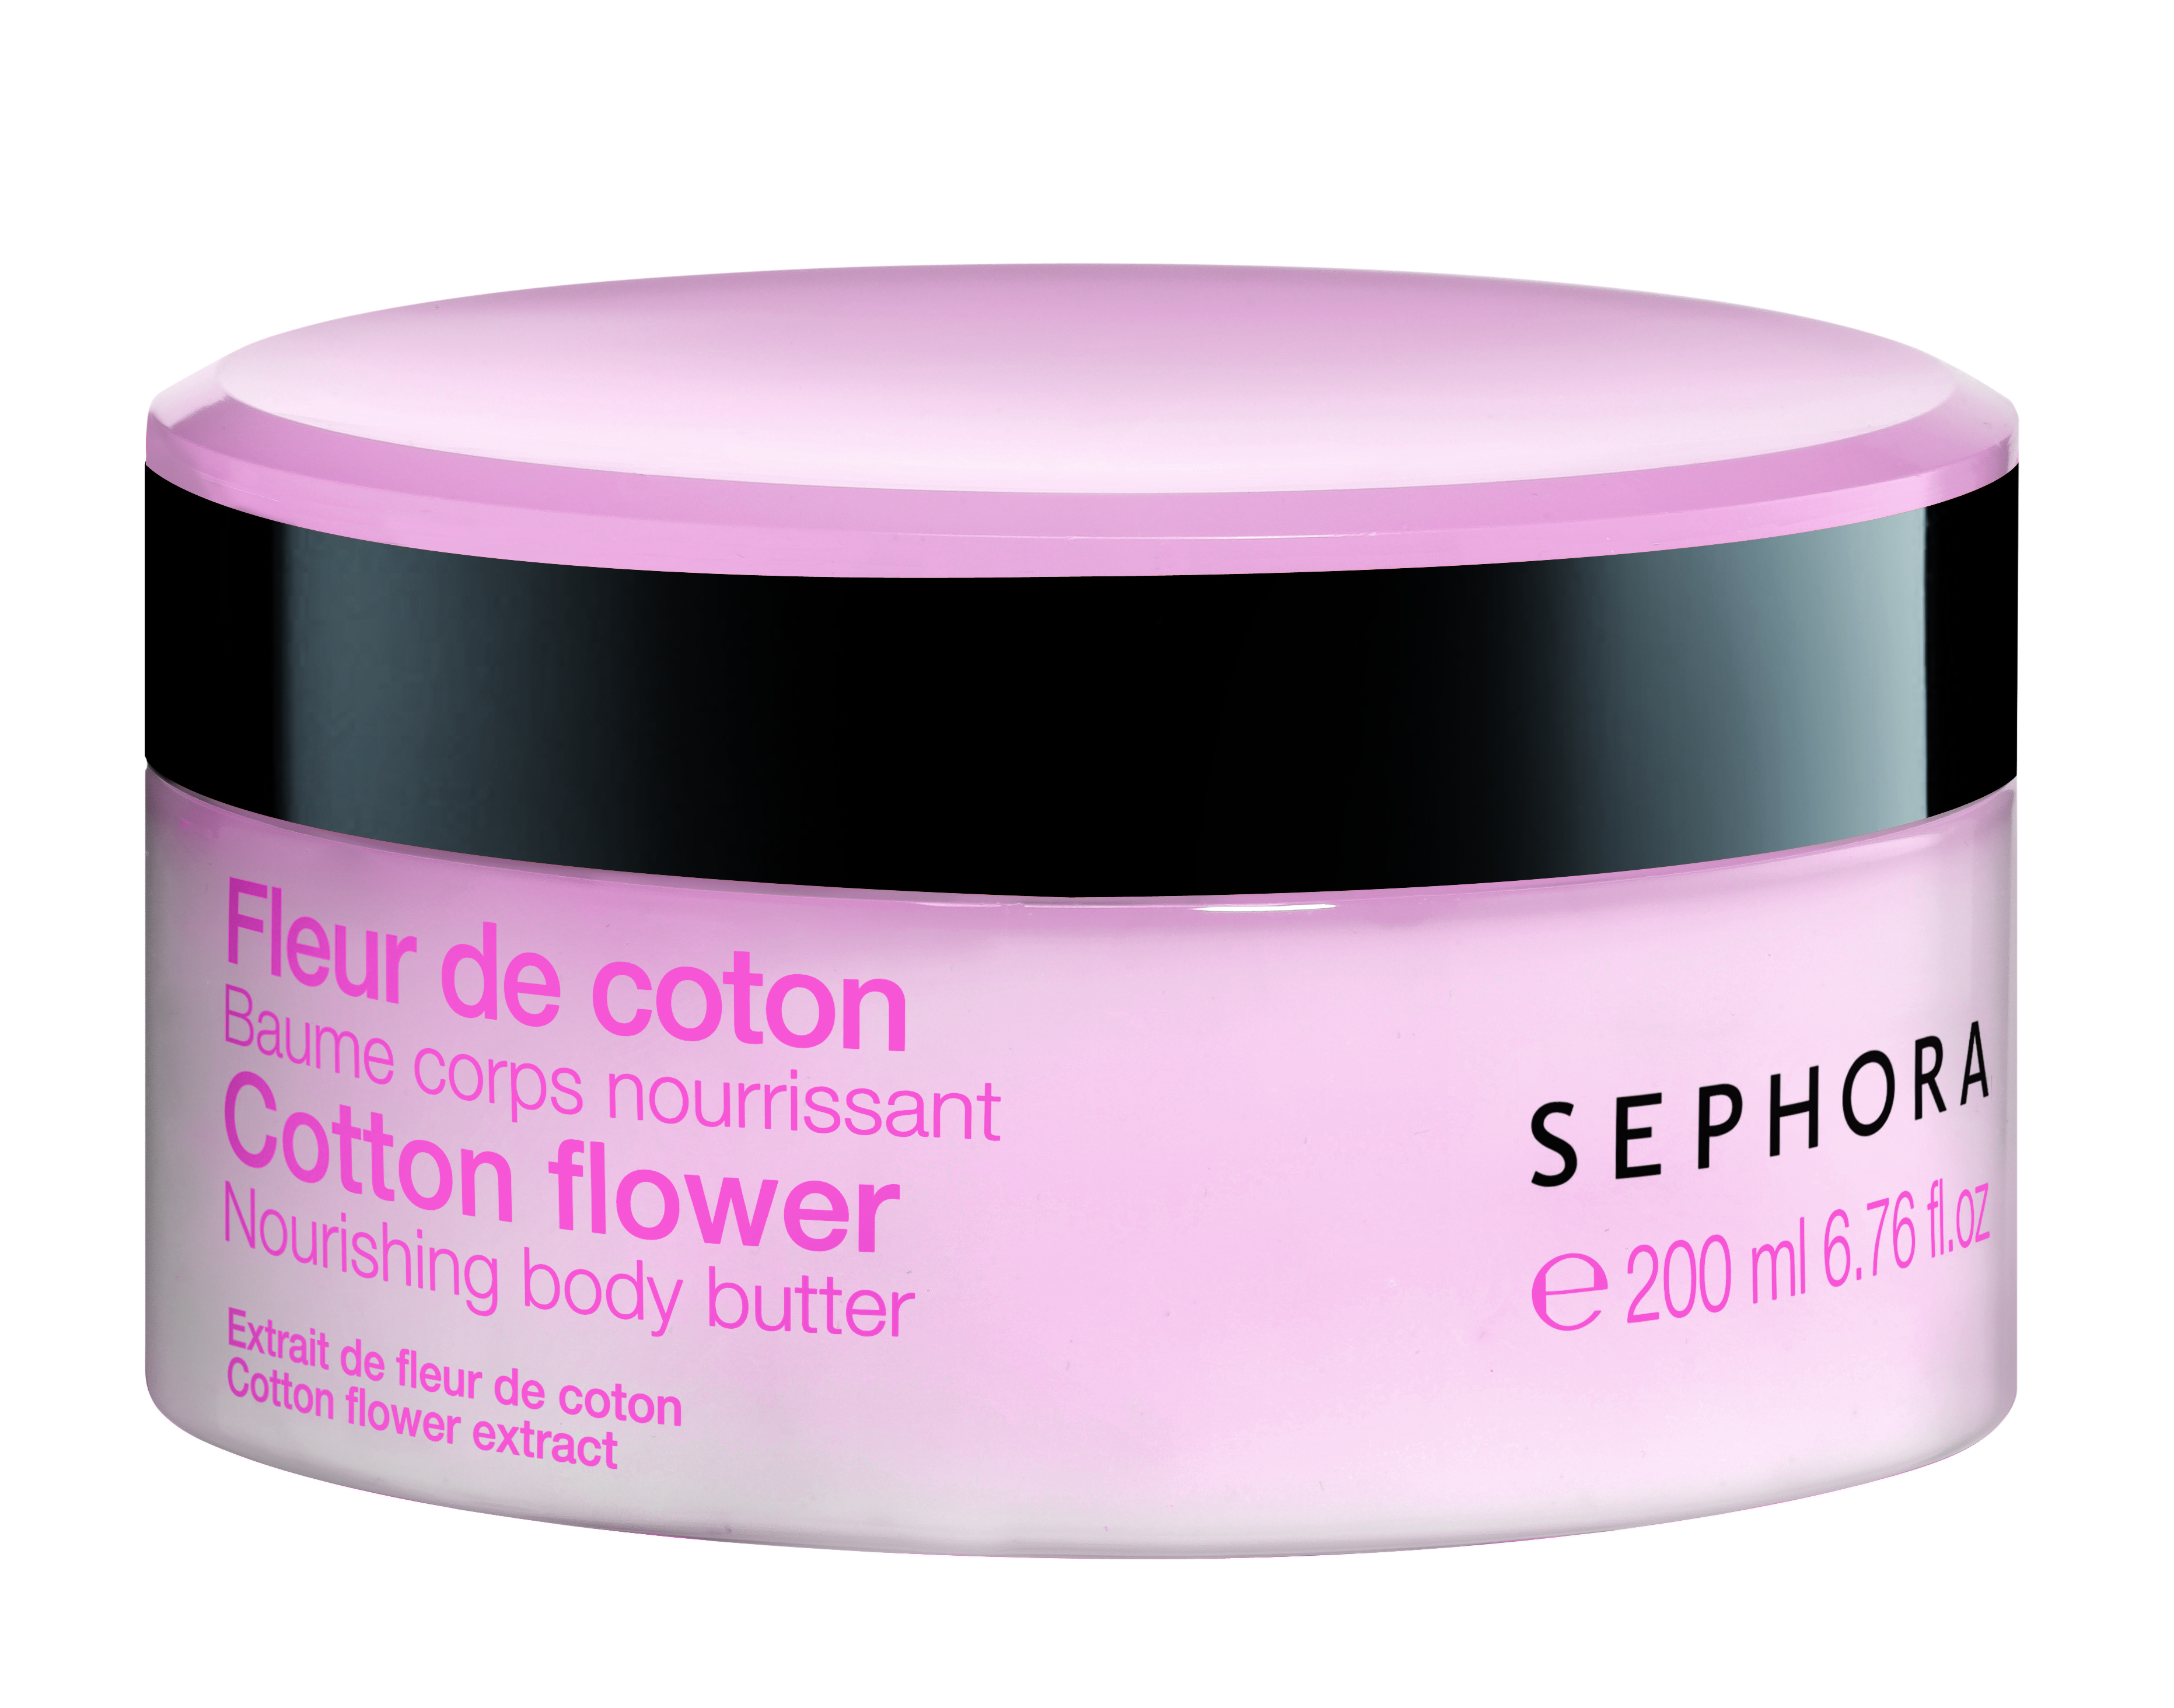 Sephora Fleur de Coton bath range | lacedinleather